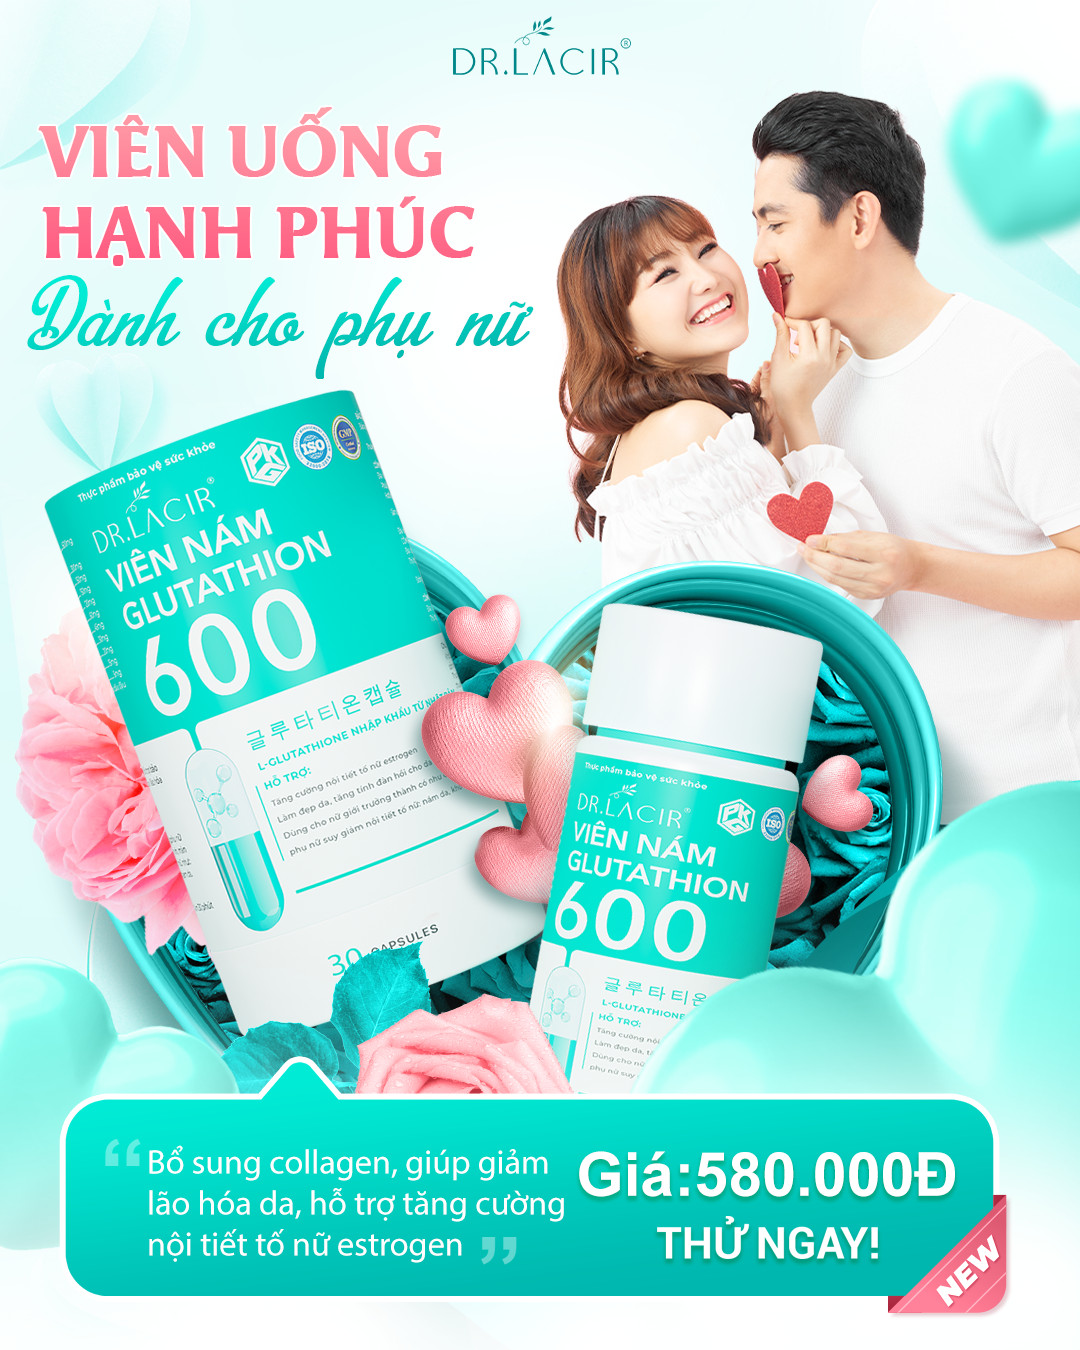 vien-nam-glutathion-600-vien-uong-hanh-phuc-danh-cho-phu-nu-lo-dien-nhan-sac-2-cuc-xinh